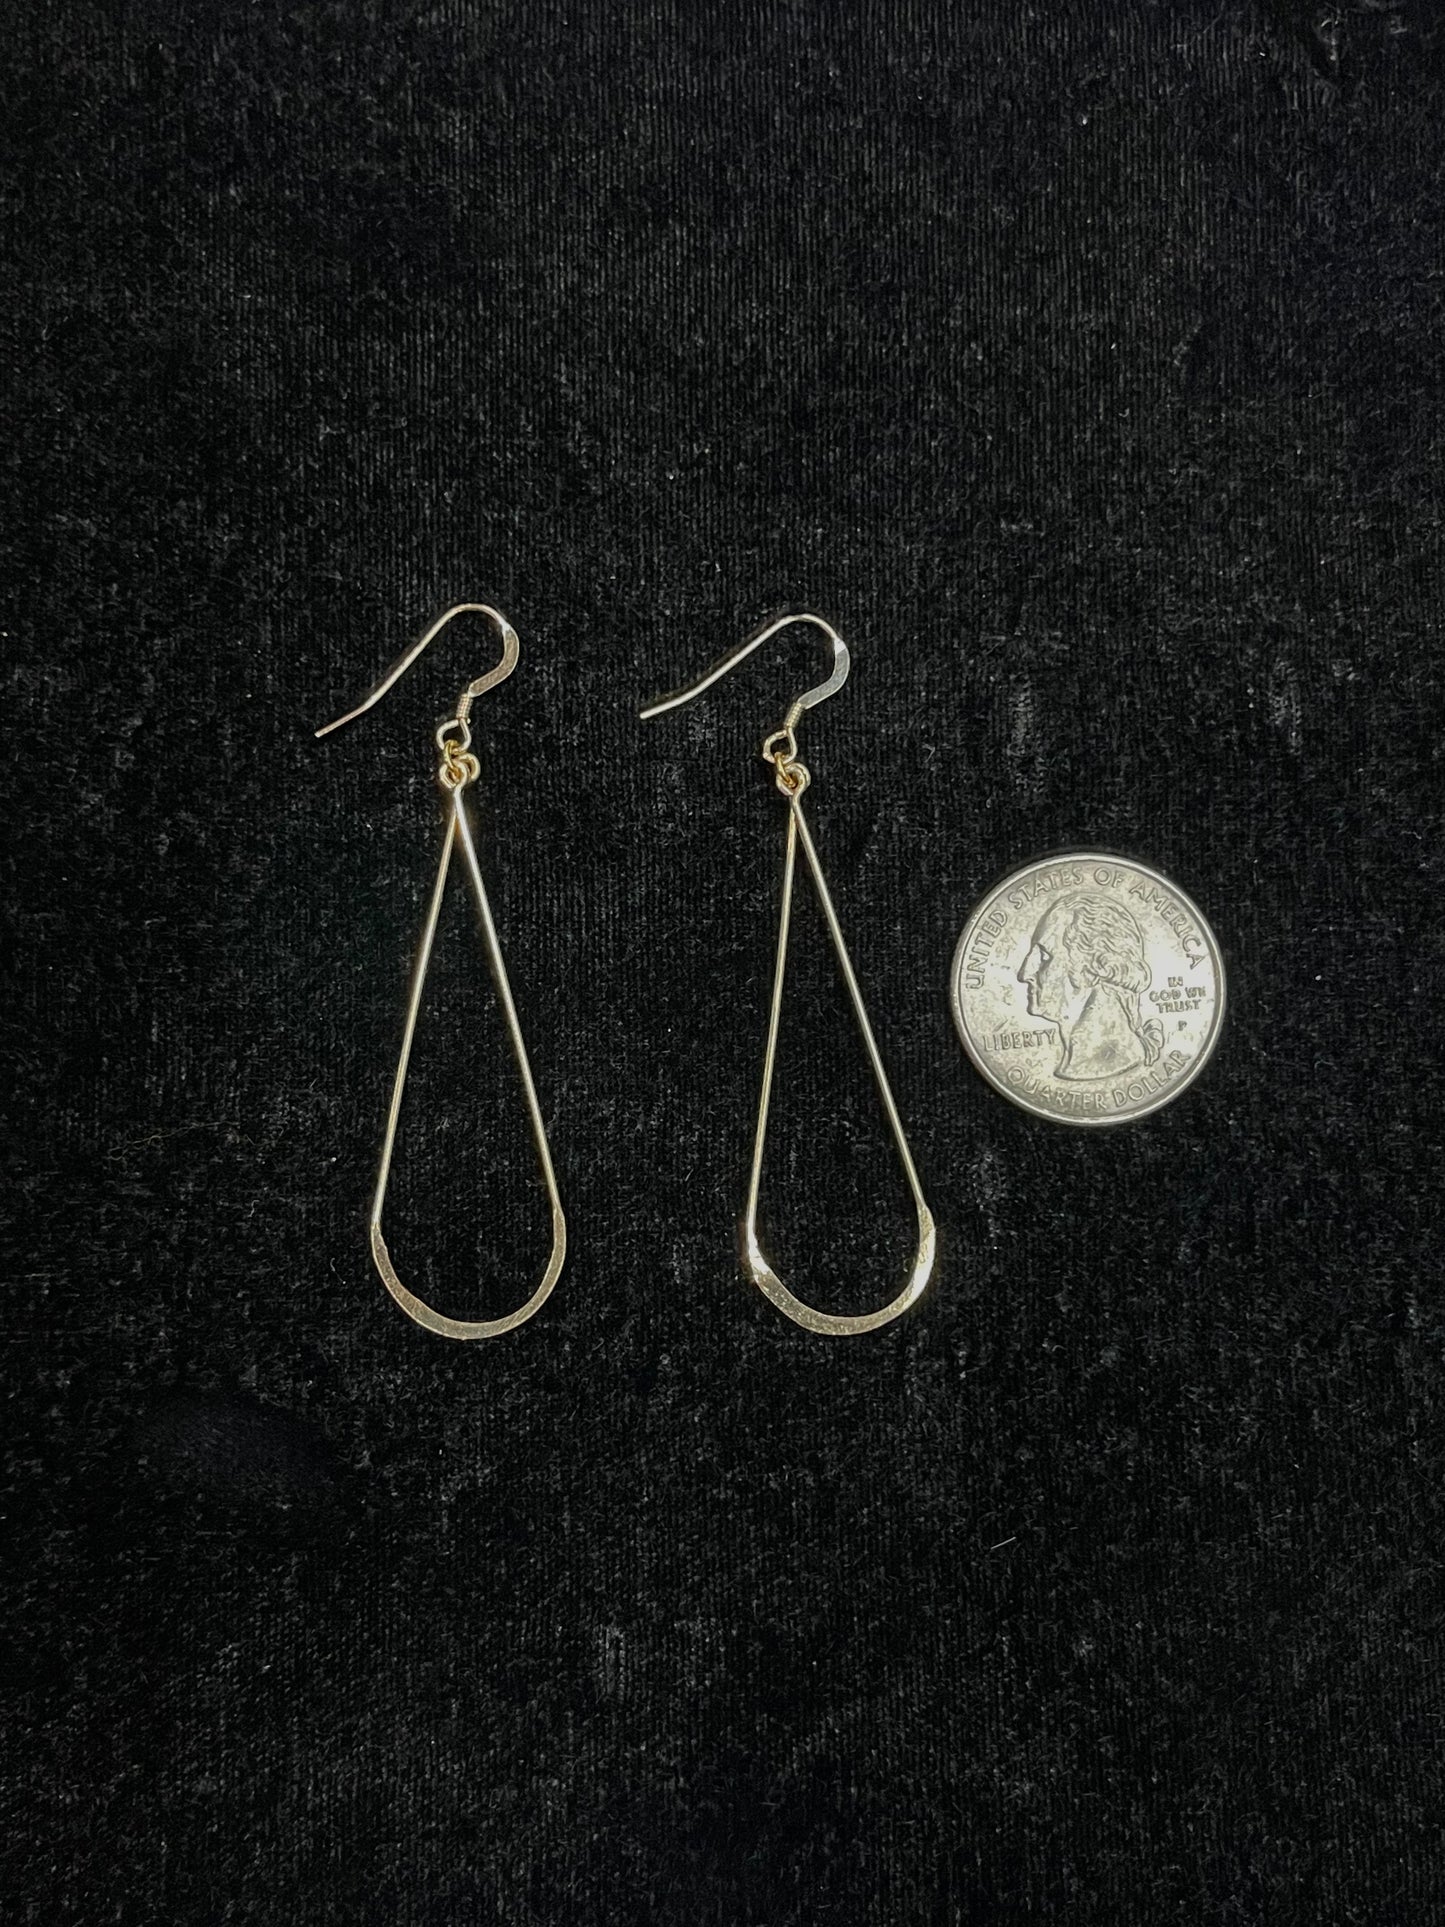 14k Gold filled lightweight earrings 2 1/2" long